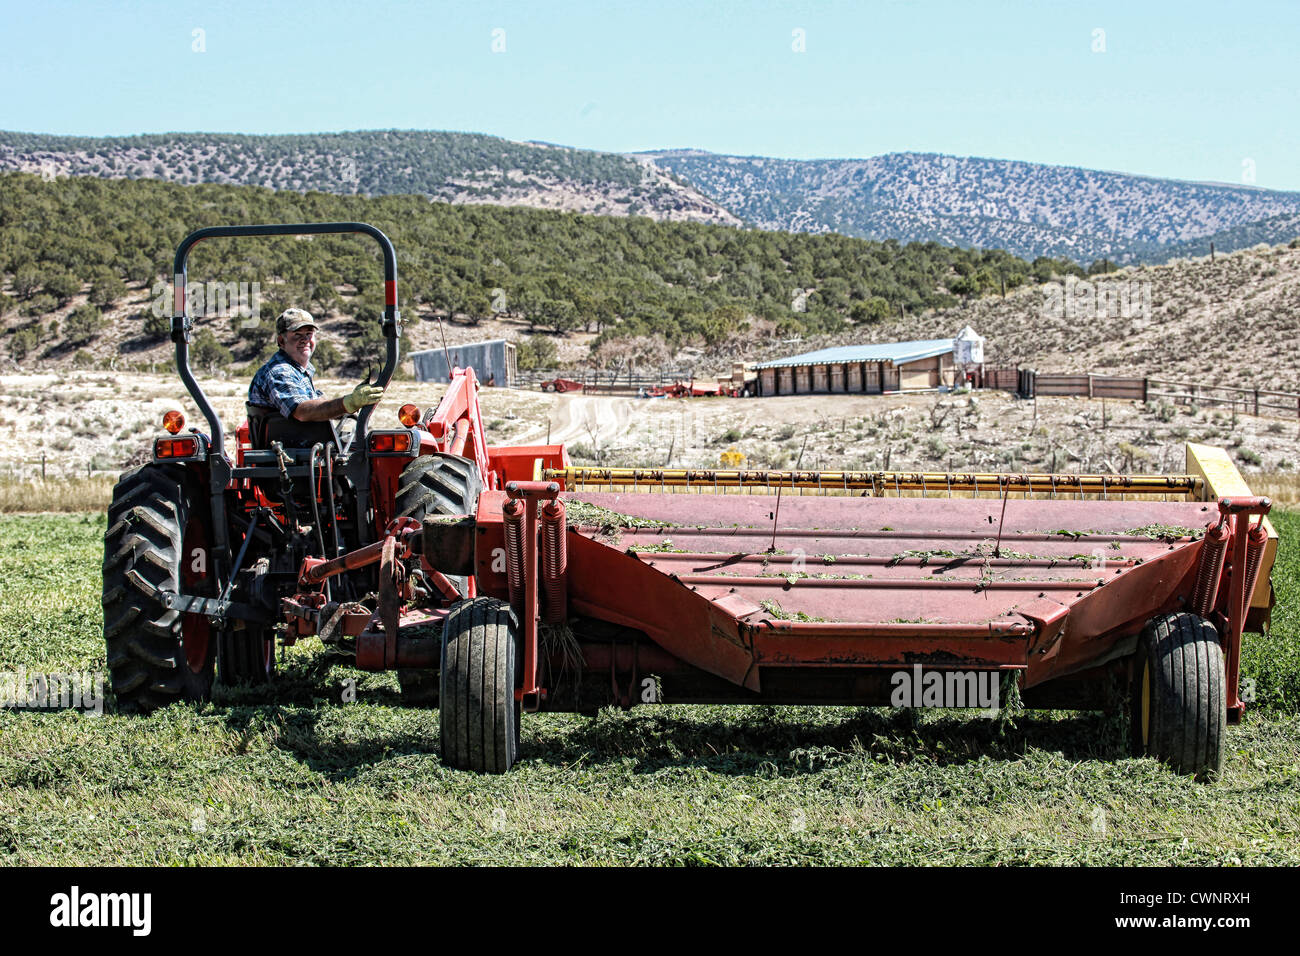 Farmer cuts, swaths alphalpha, hay in a green field, central Utah. Stock Photo